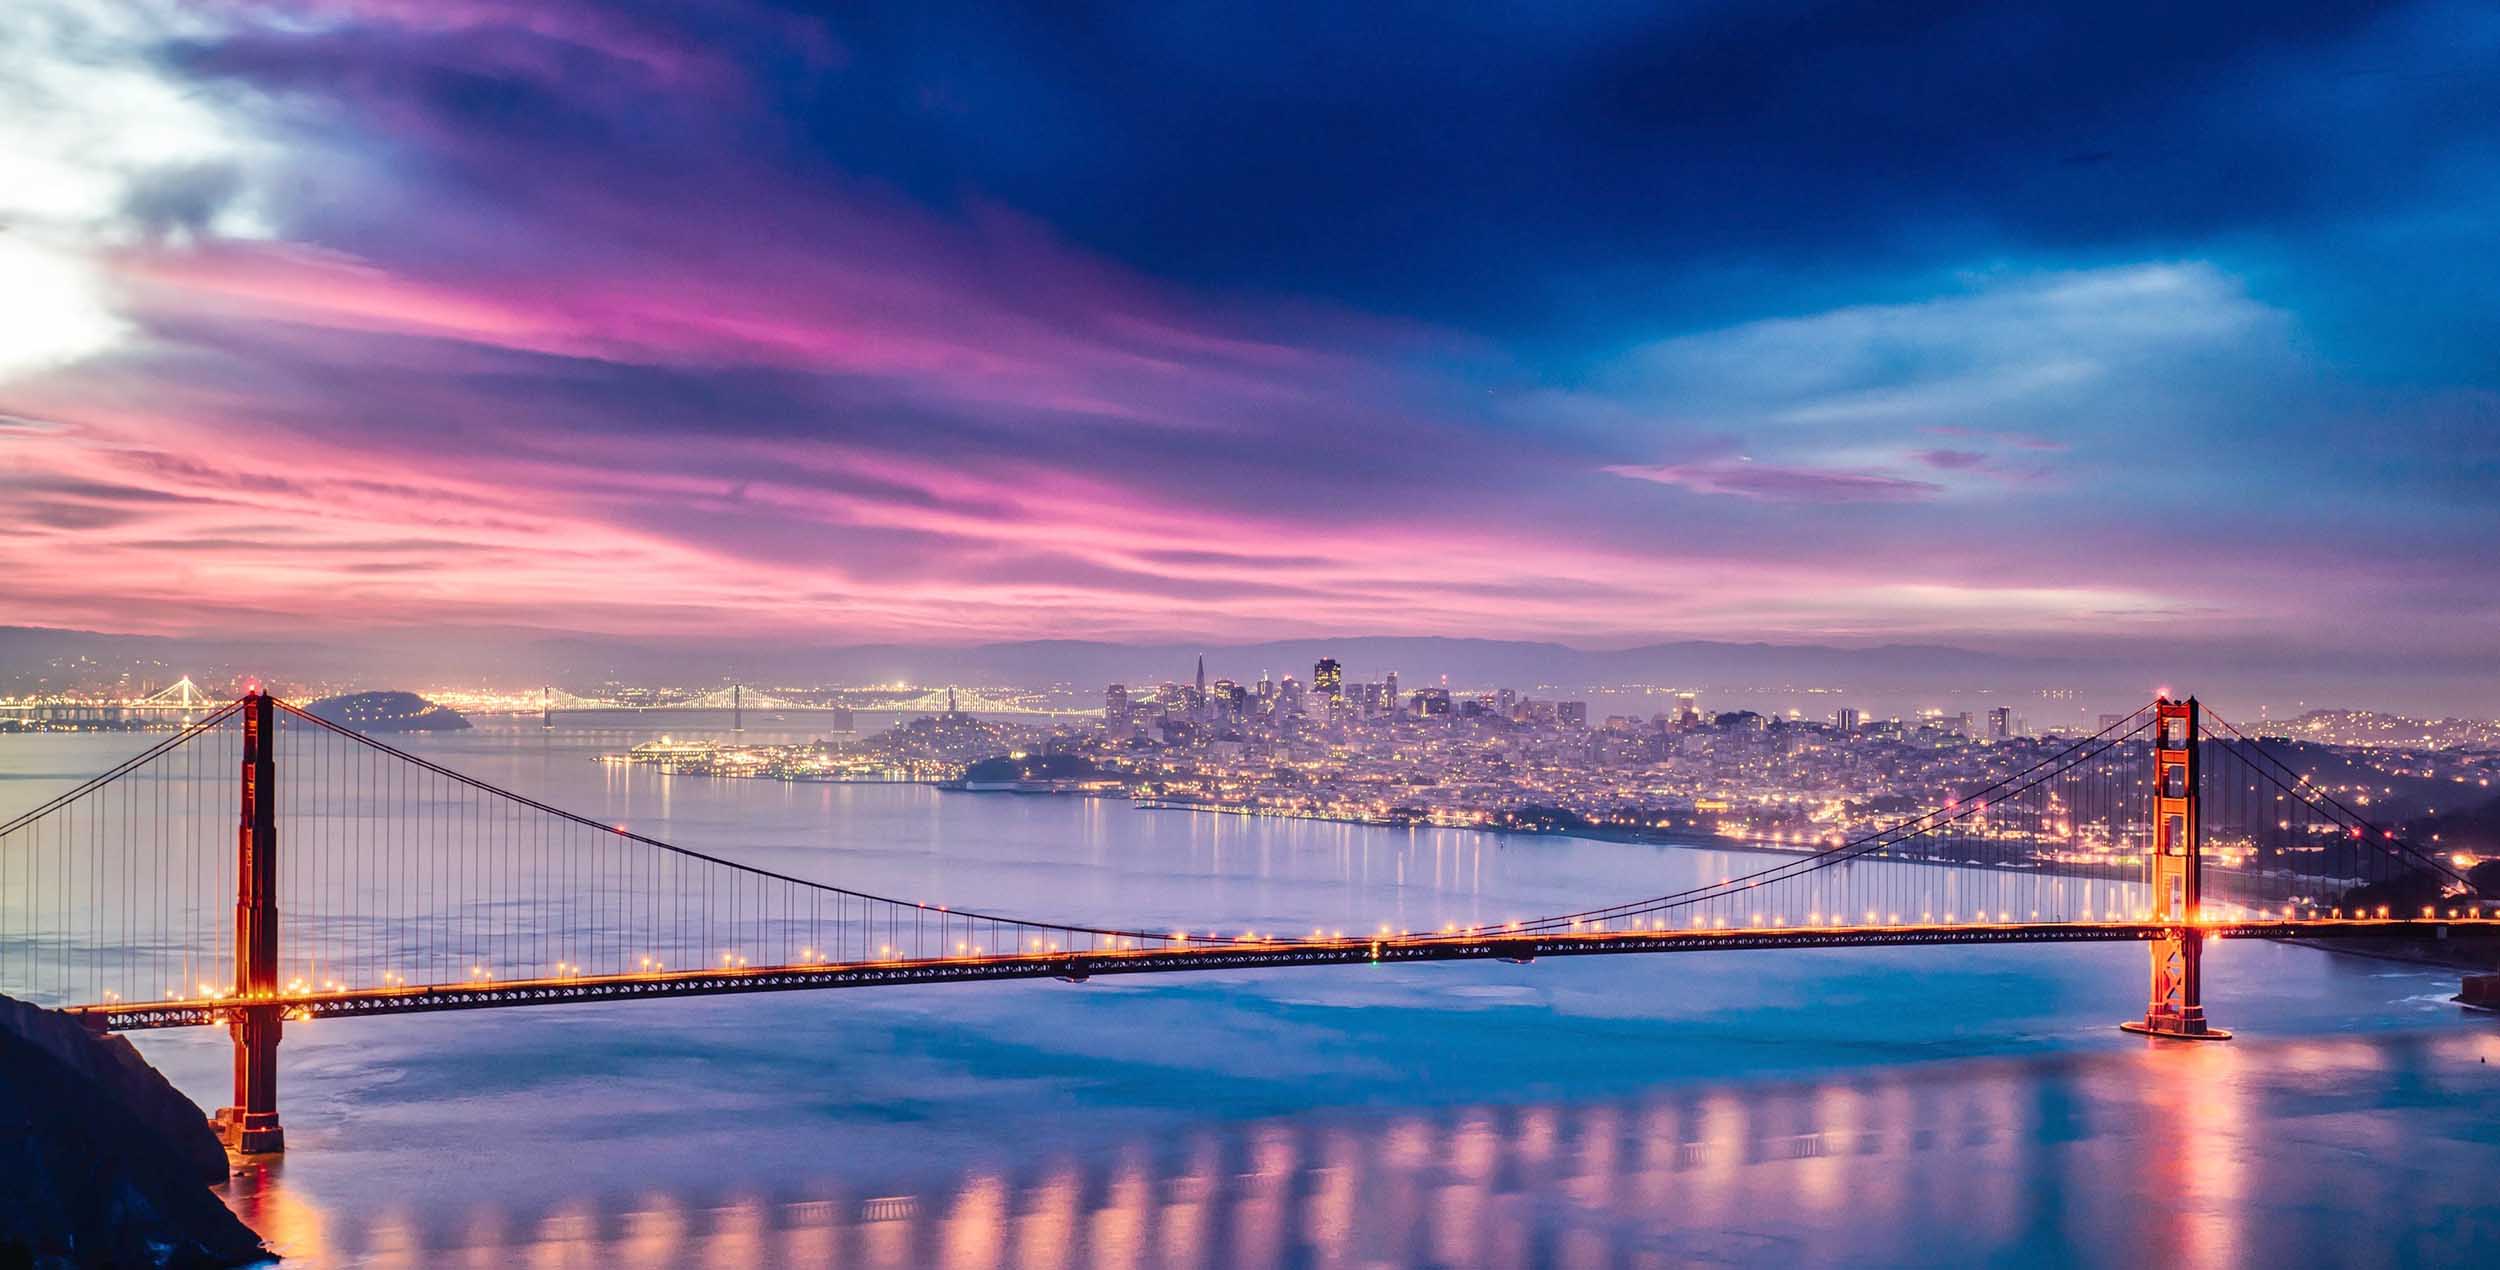 1b-San-Francisco-California.jpg